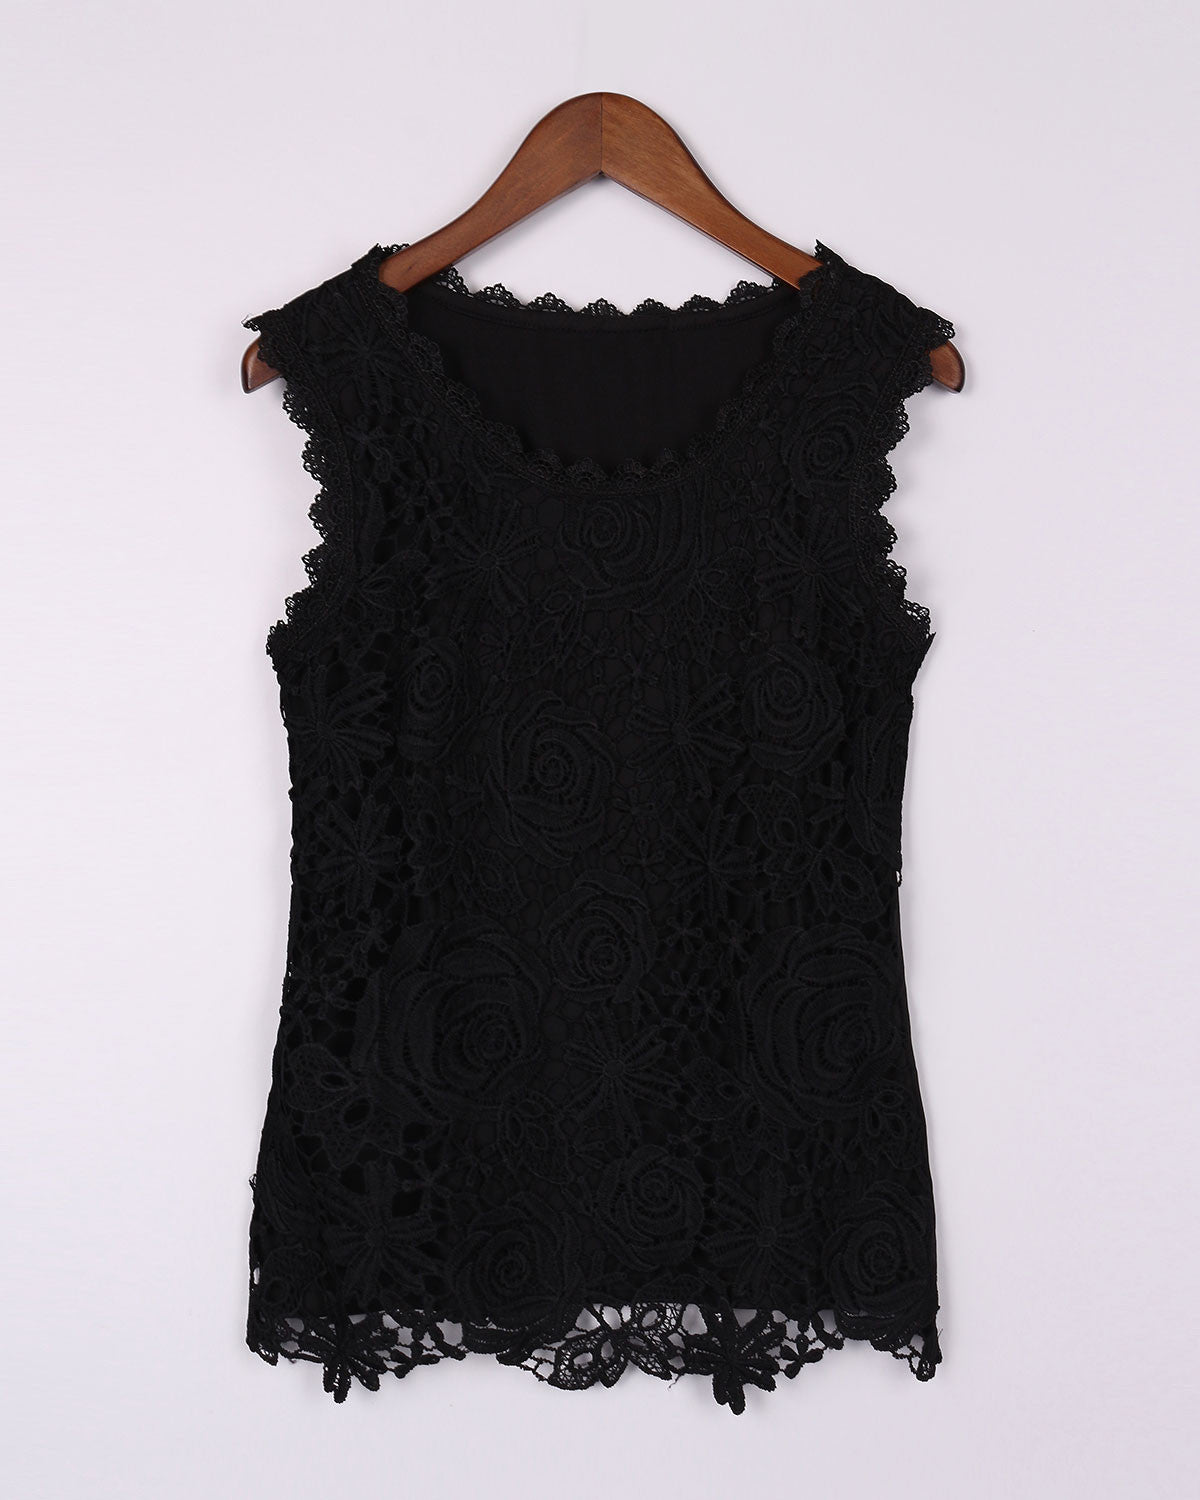 Online discount shop Australia - Fashion Women Blouse Lace Elegant Sleeveless Black White Renda Crochet Casual Shirts Tops Plus Size